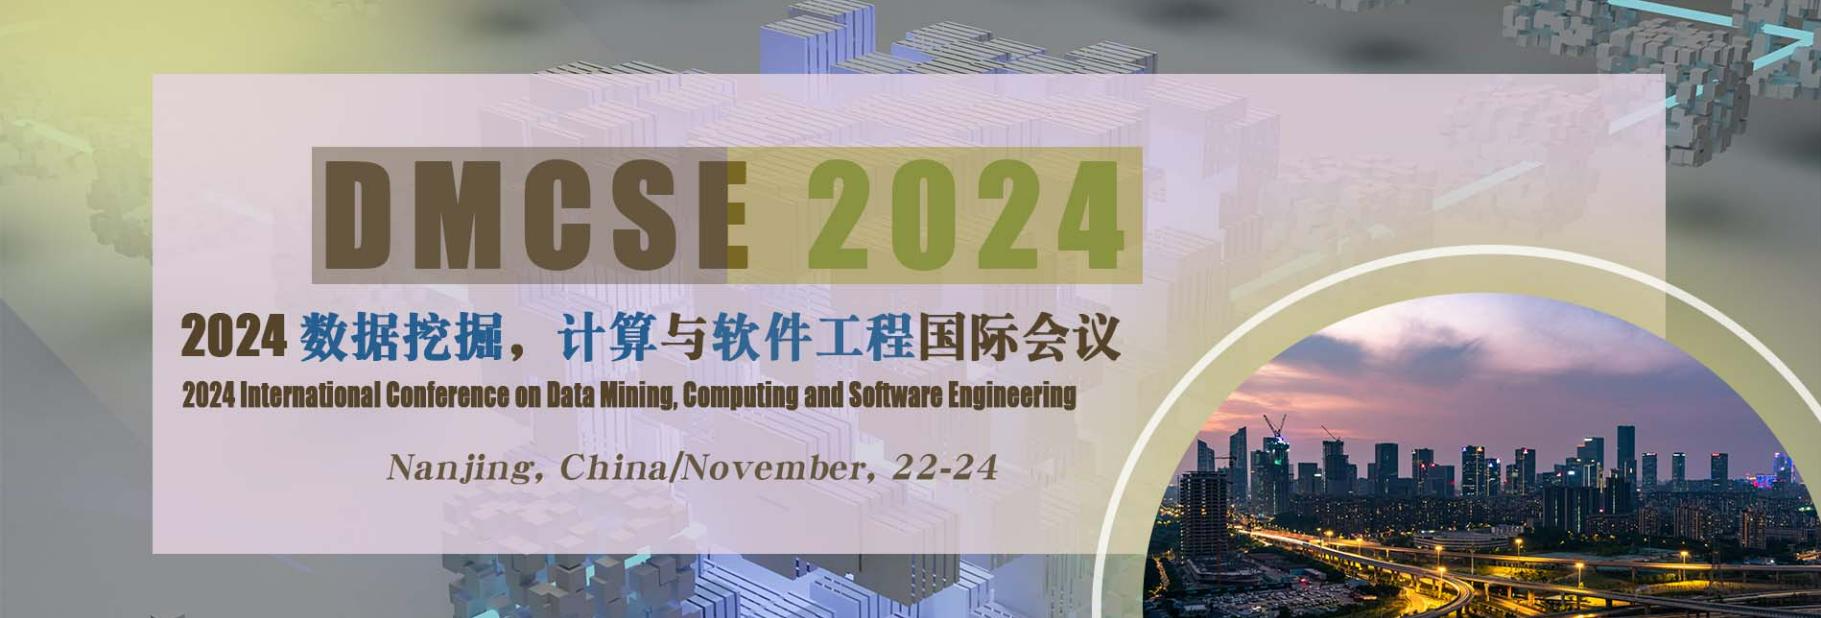 2024 International Conference on Data Mining, Computing and Software Engineering (DMCSE 2024), Nanjing, Jiangsu, China